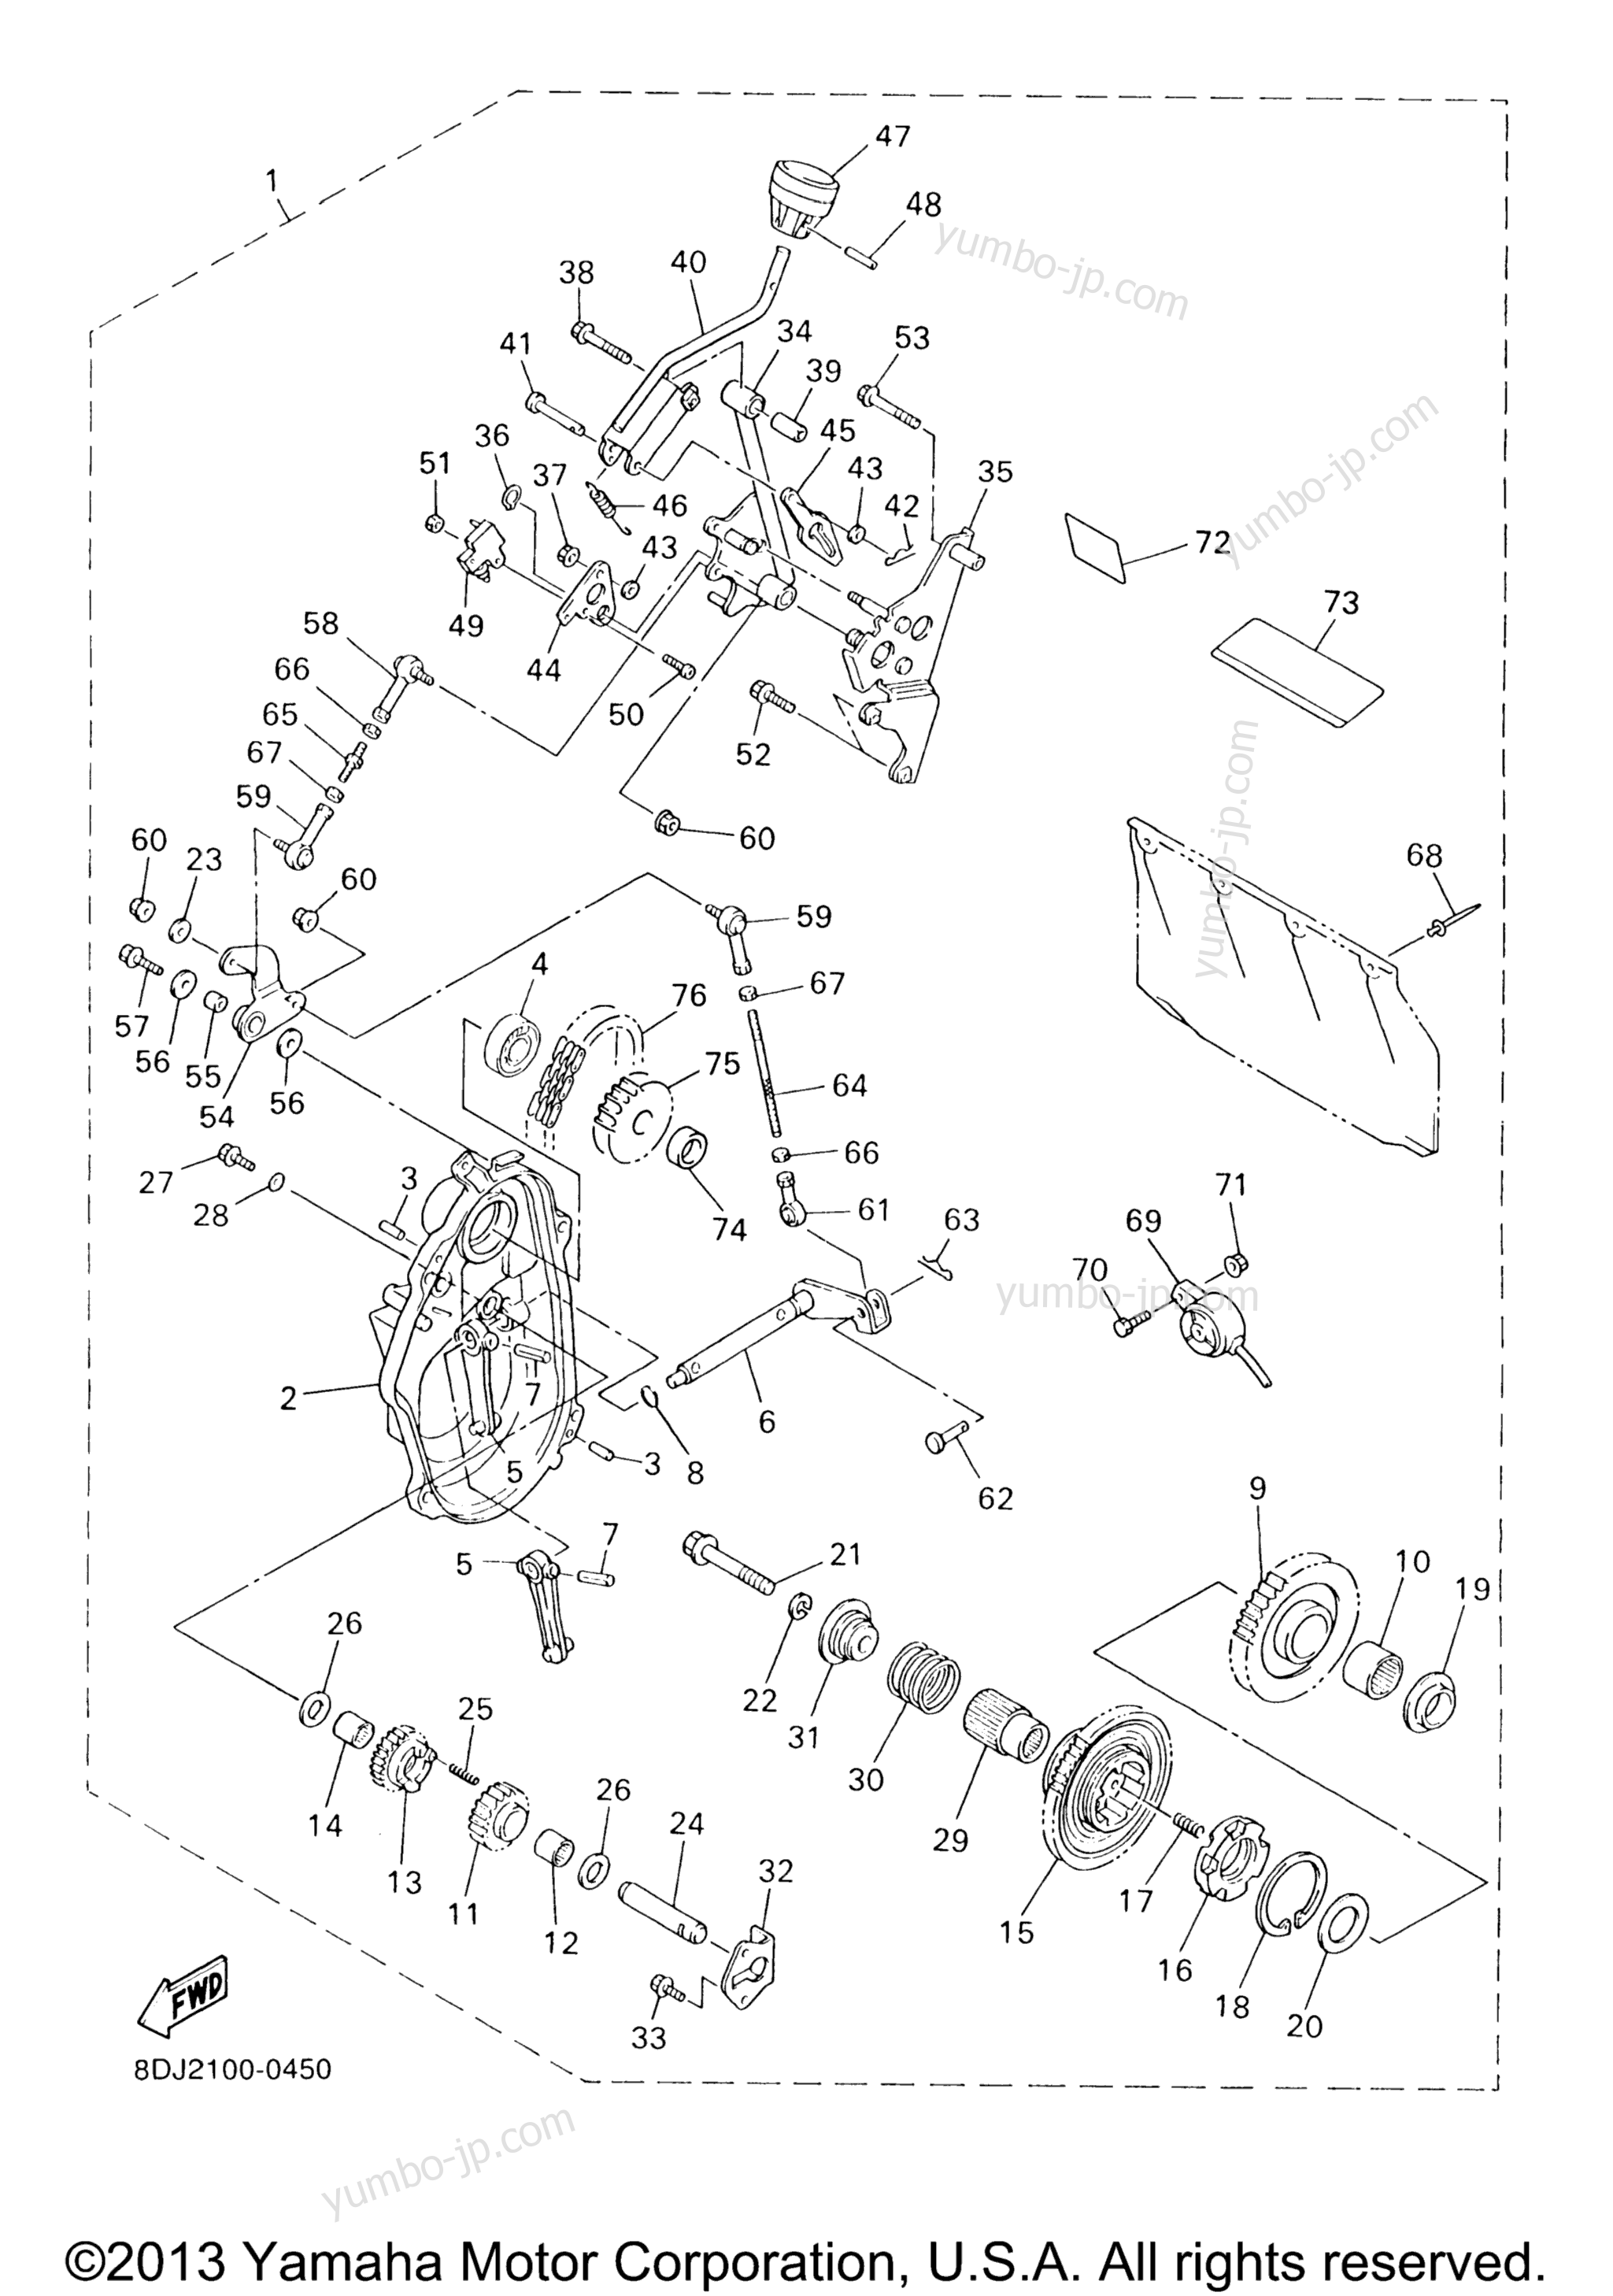 Alternate Reverse Gear Kit for snowmobiles YAMAHA PHAZER 500 (PZ500F) 2001 year